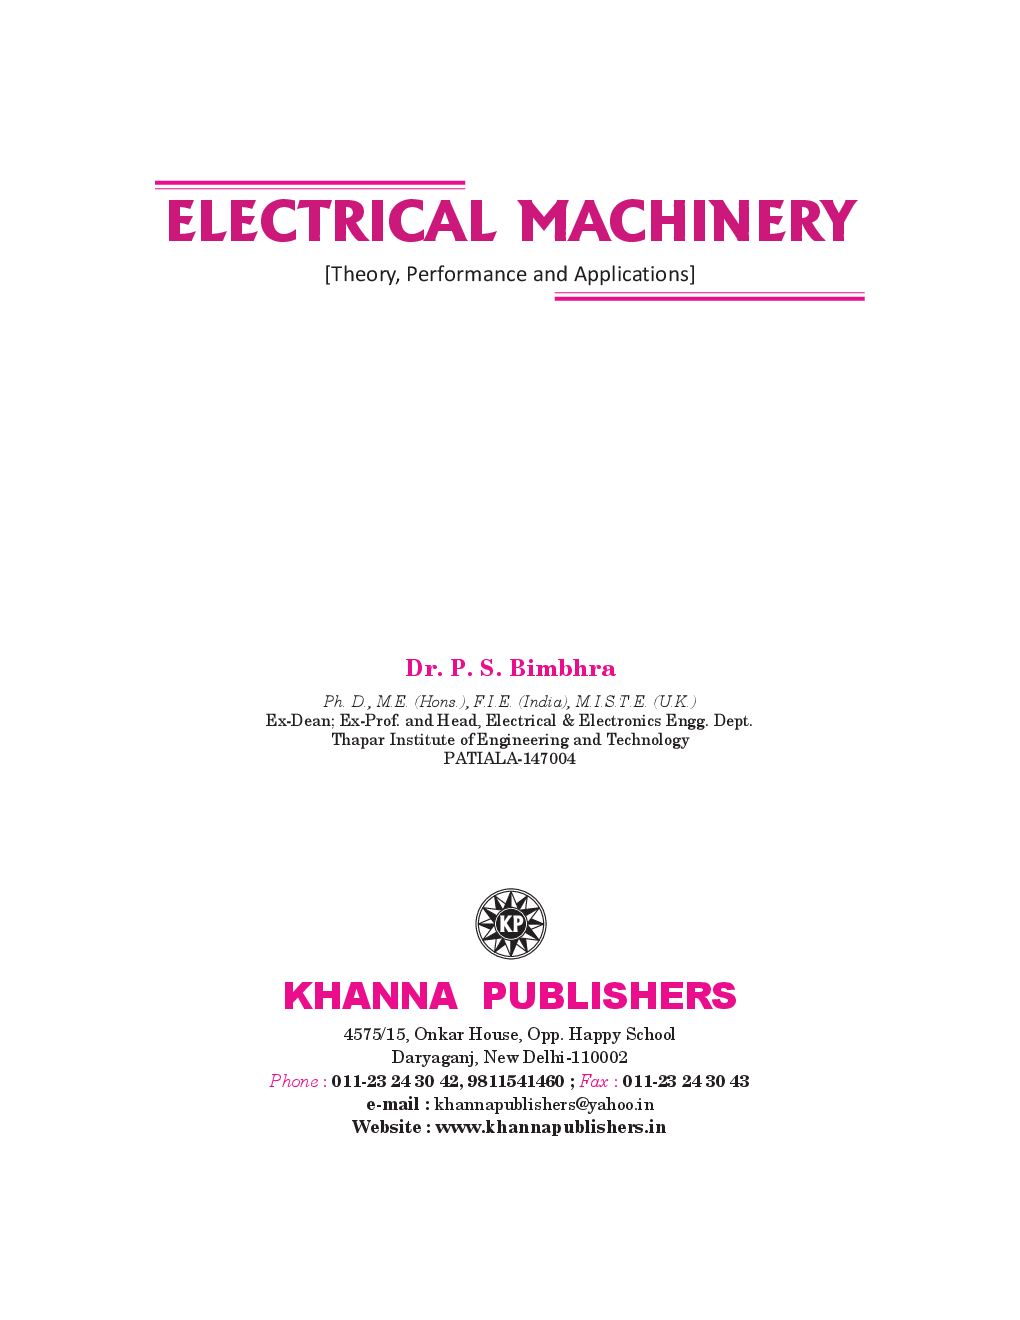 Electrical machinery by dr.p.s.bimbhra pdf download